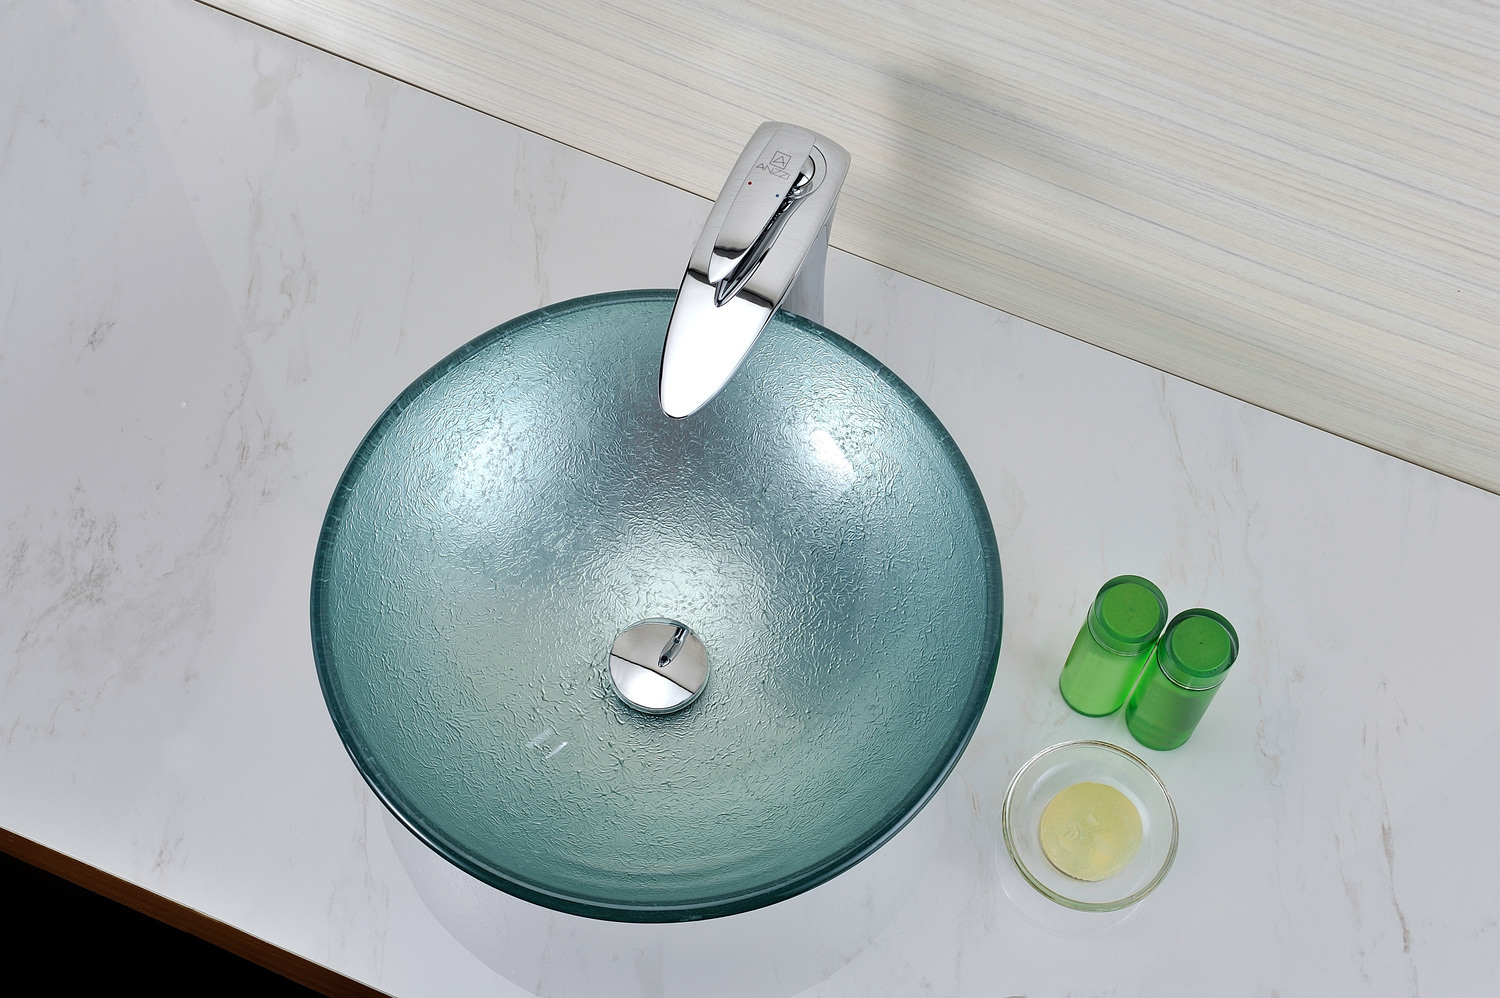 vanity top basin Anzzi BATHROOM - Sinks - Vessel - Tempered Glass Silver